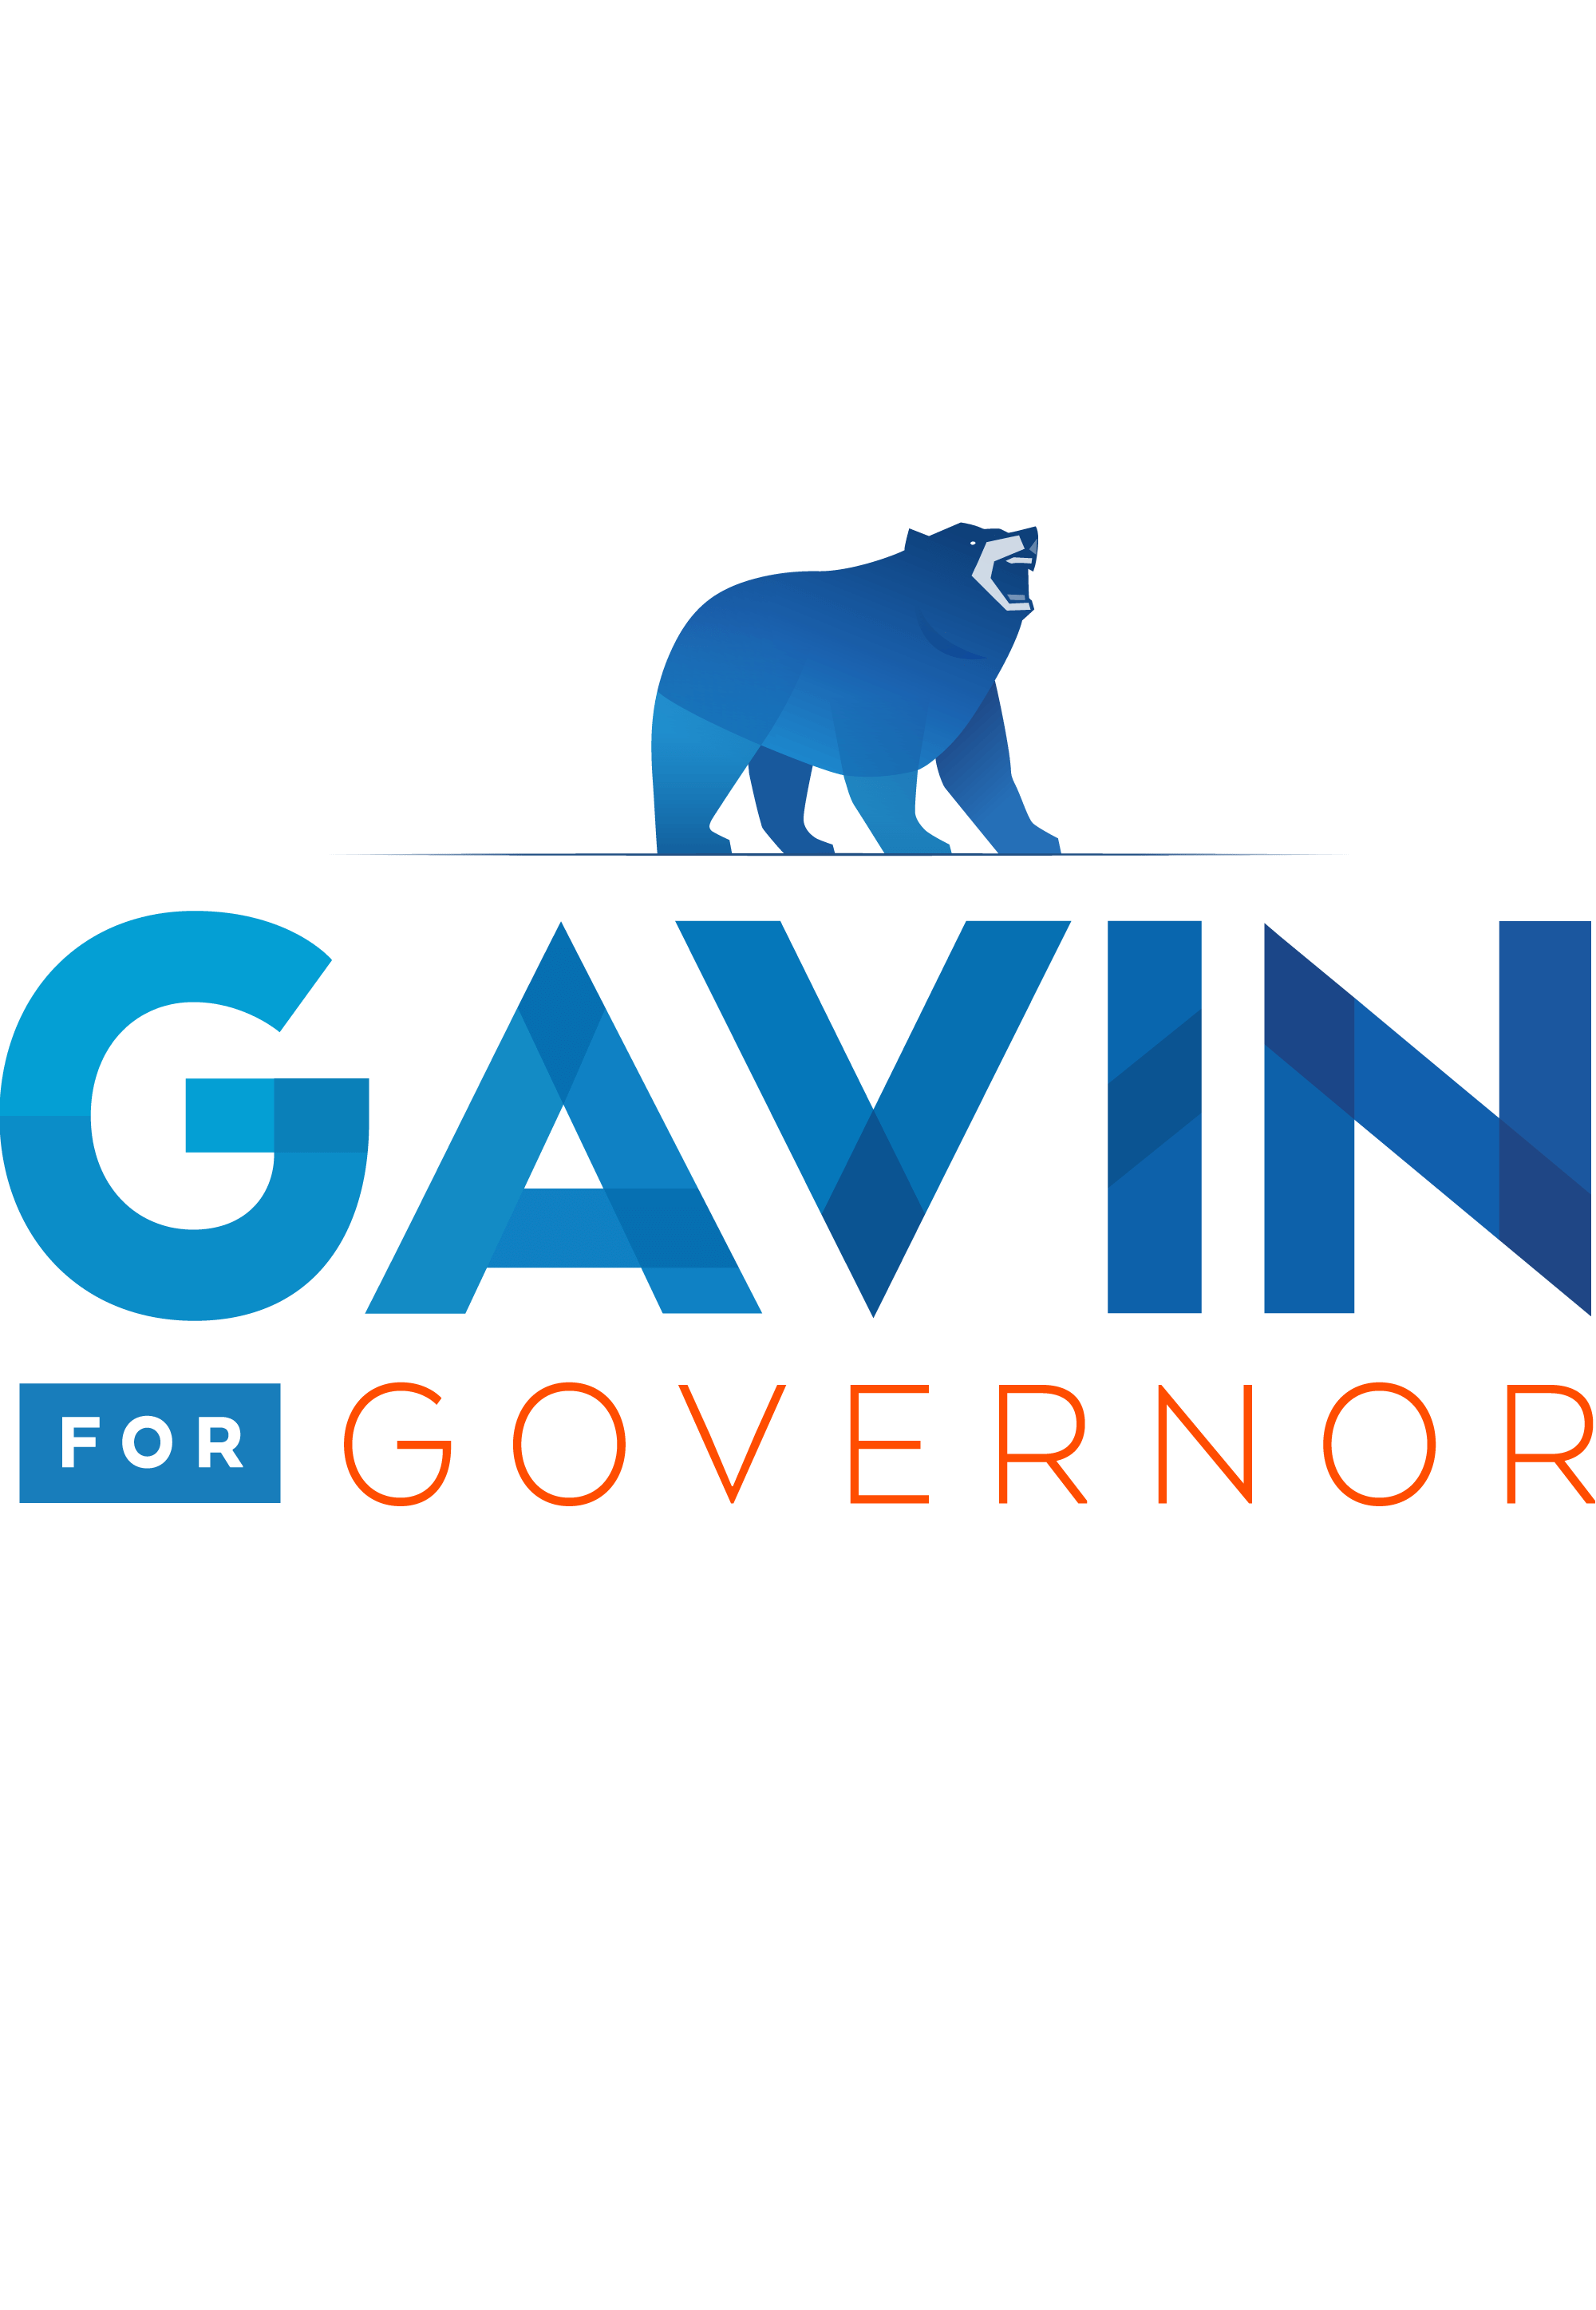 Governor Logo - Incitement project: Gavin Newsom for Governor